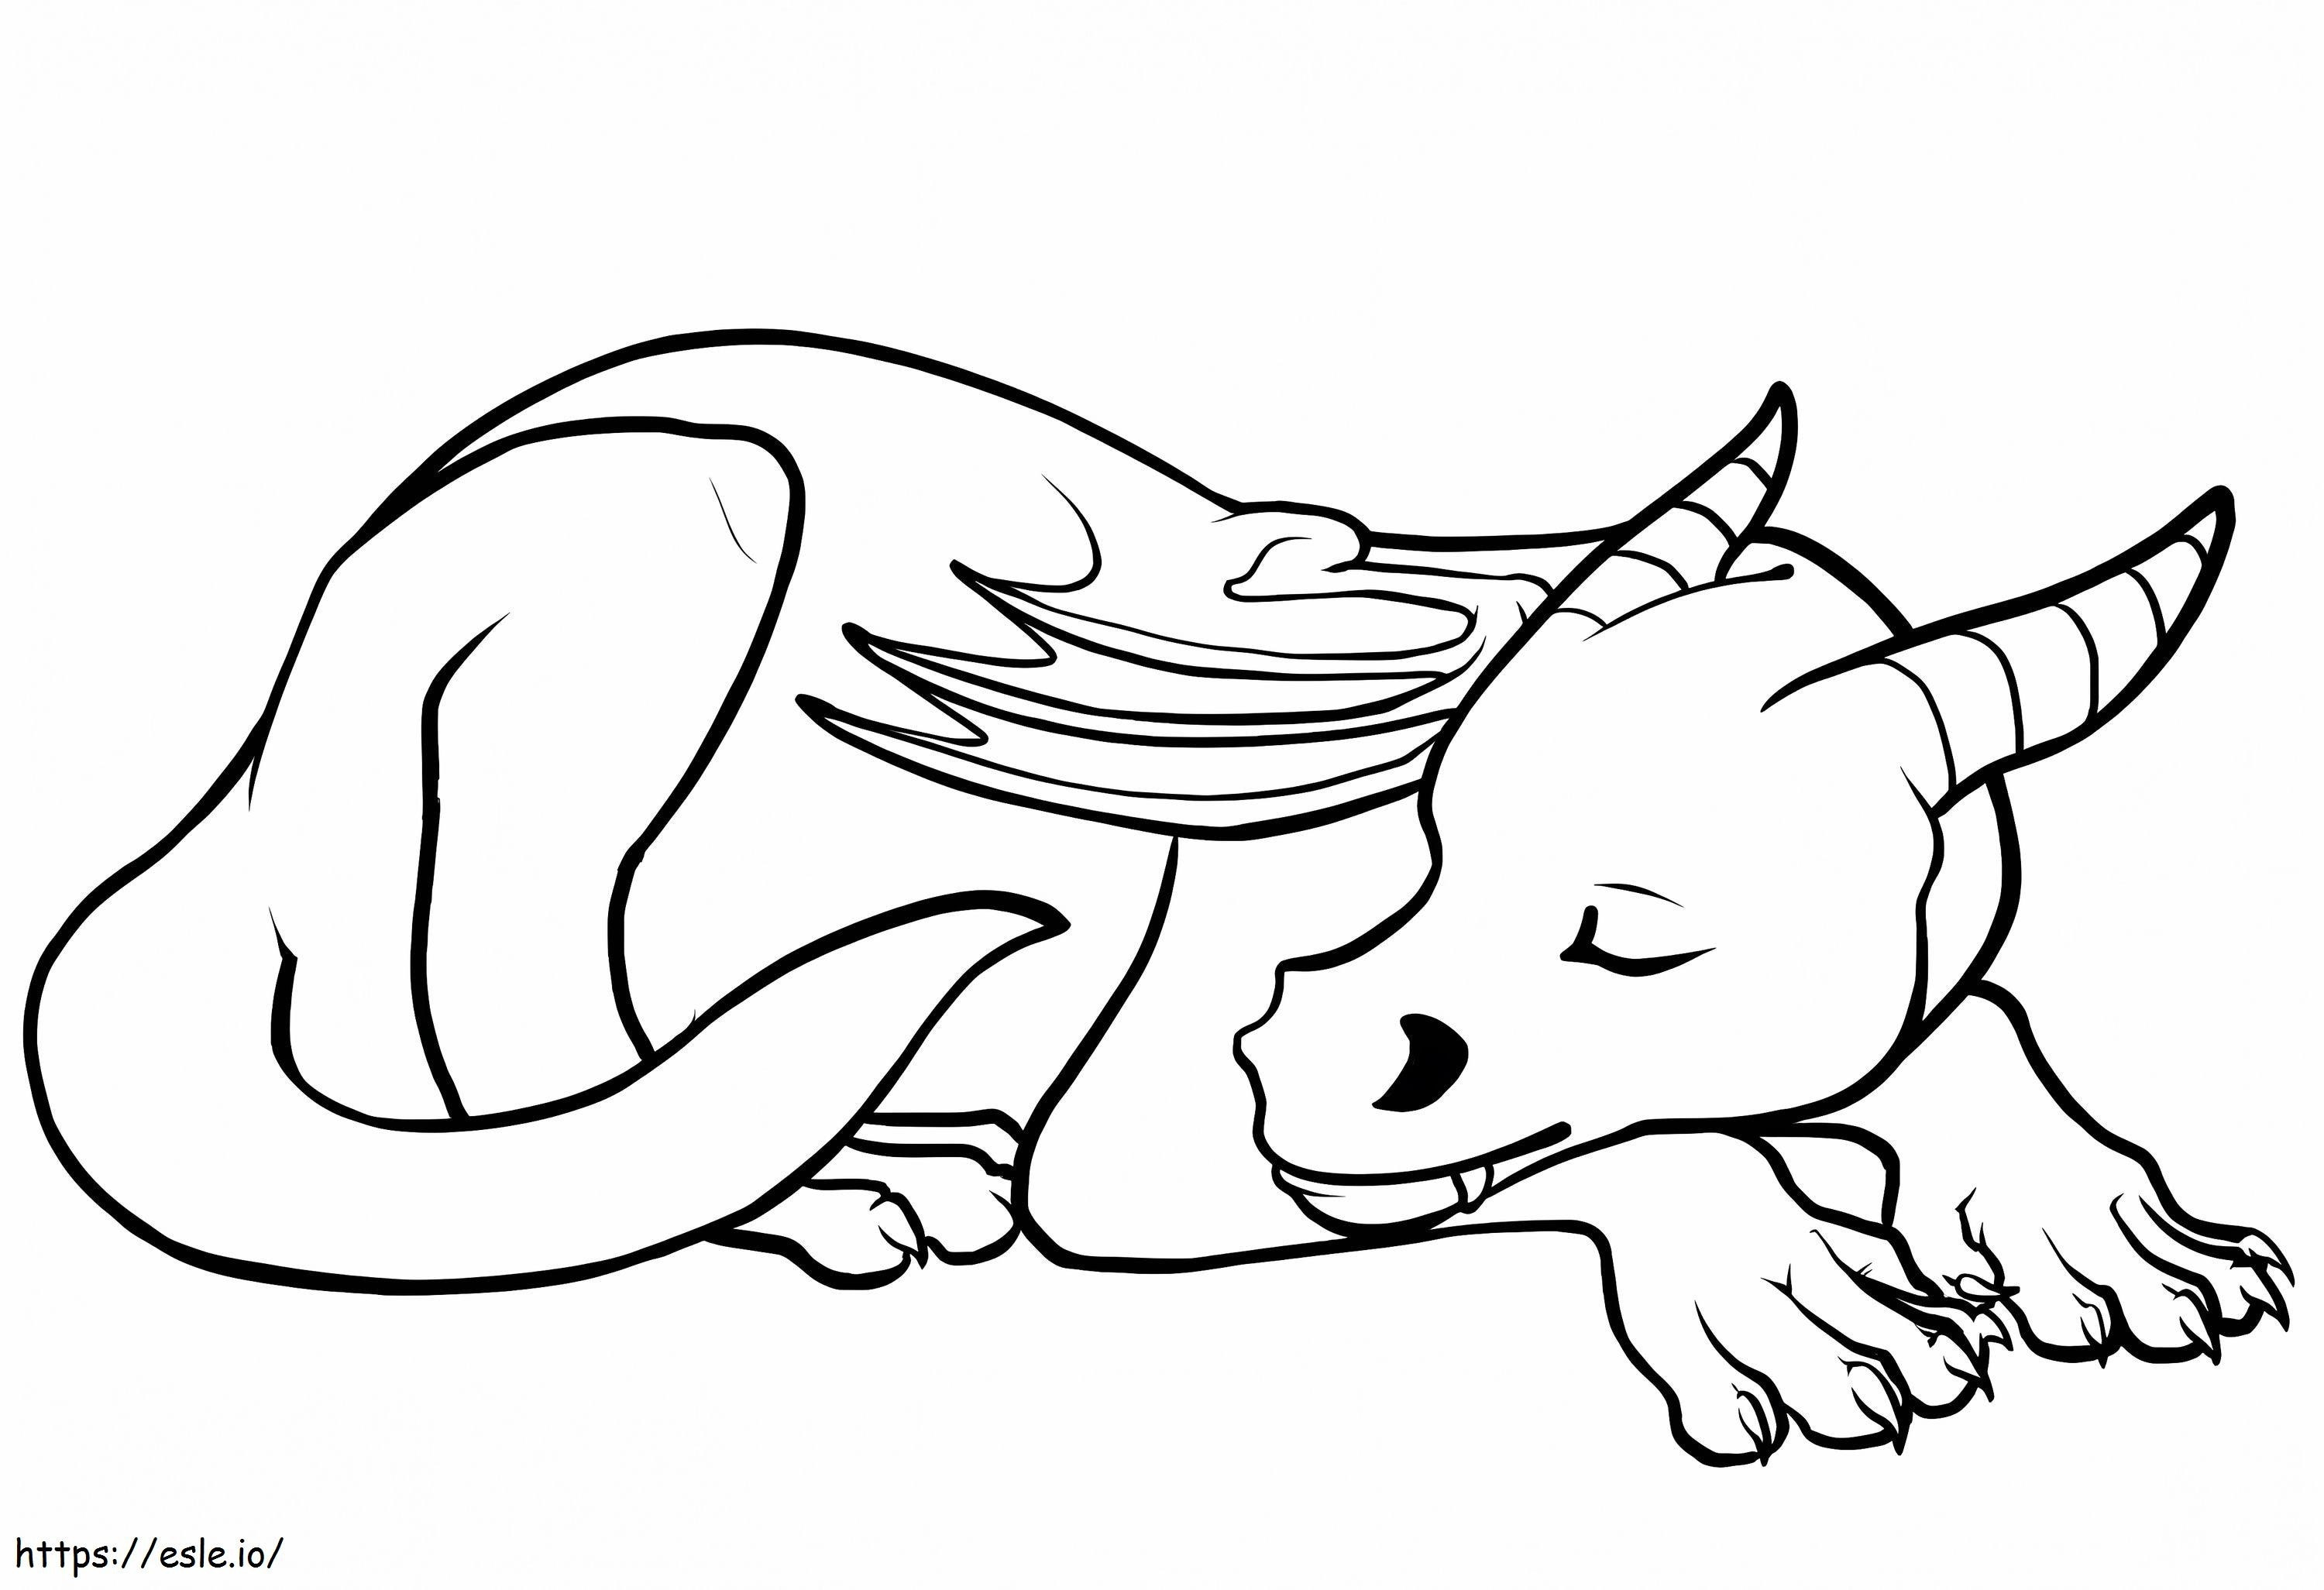 Sleeping Dragon coloring page